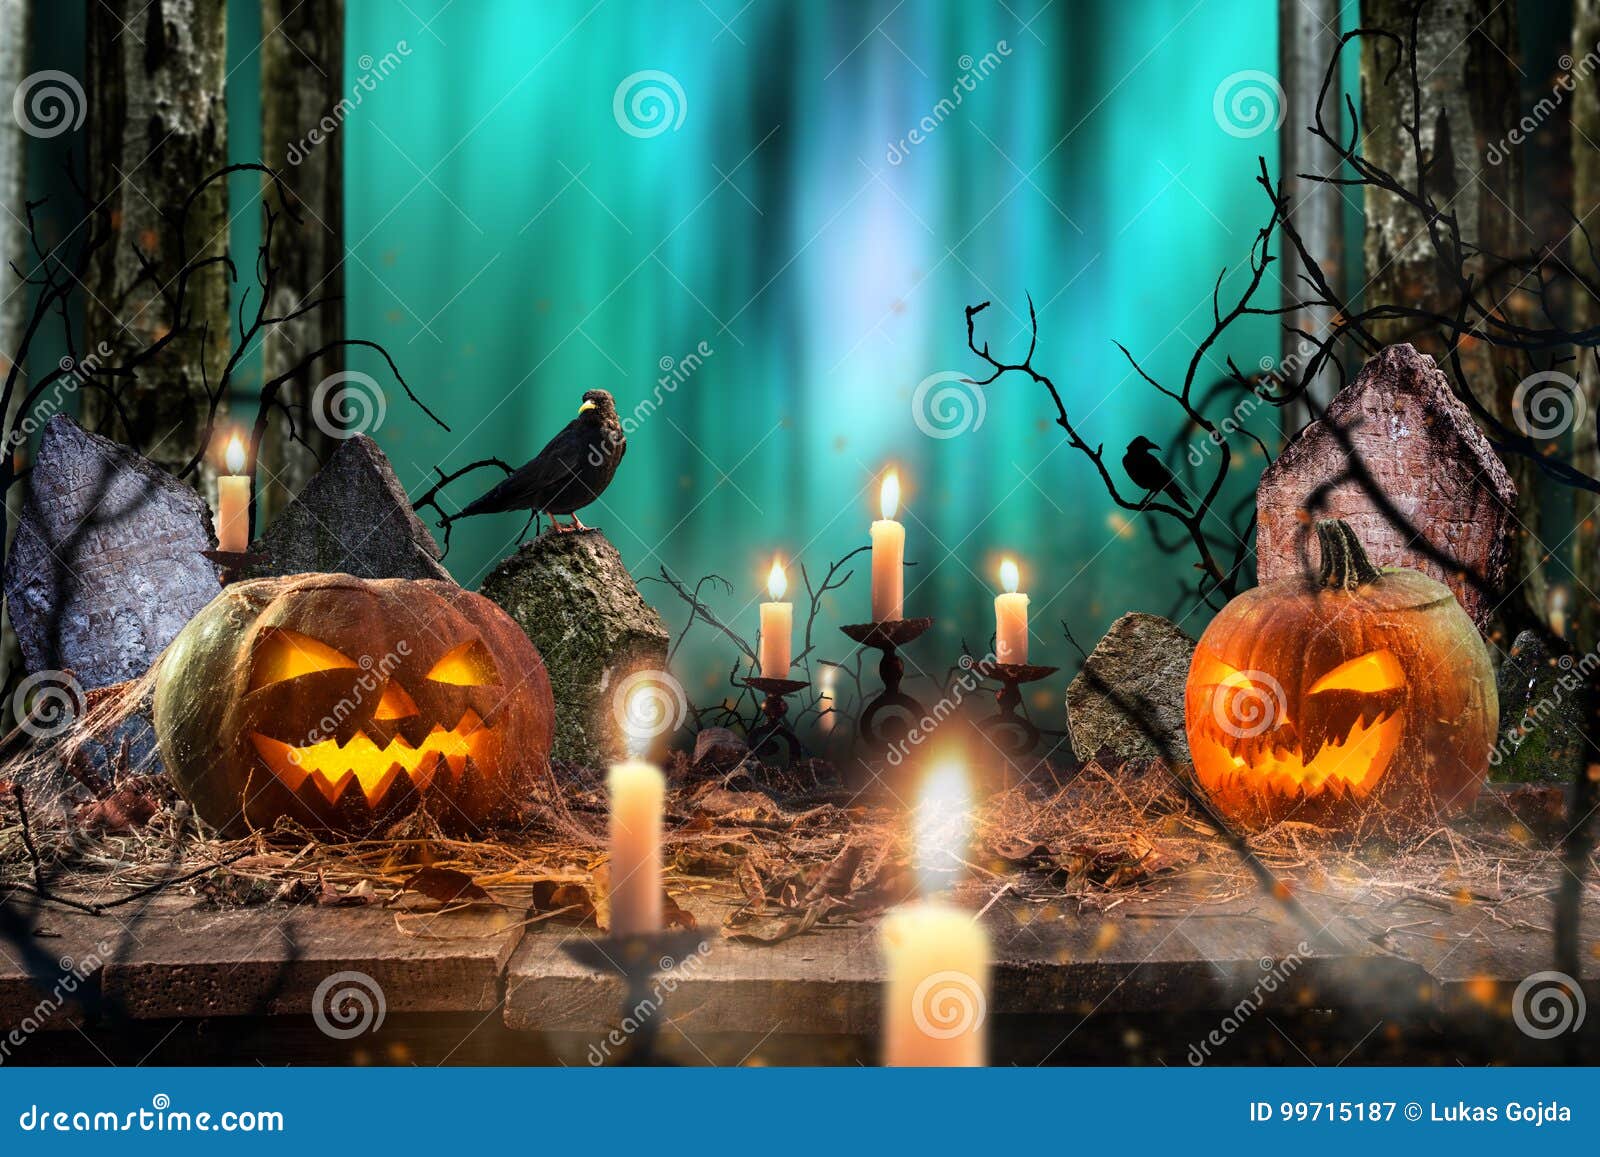 Halloween Pumpkins on Wooden Planks. Stock Image - Image of grave ...